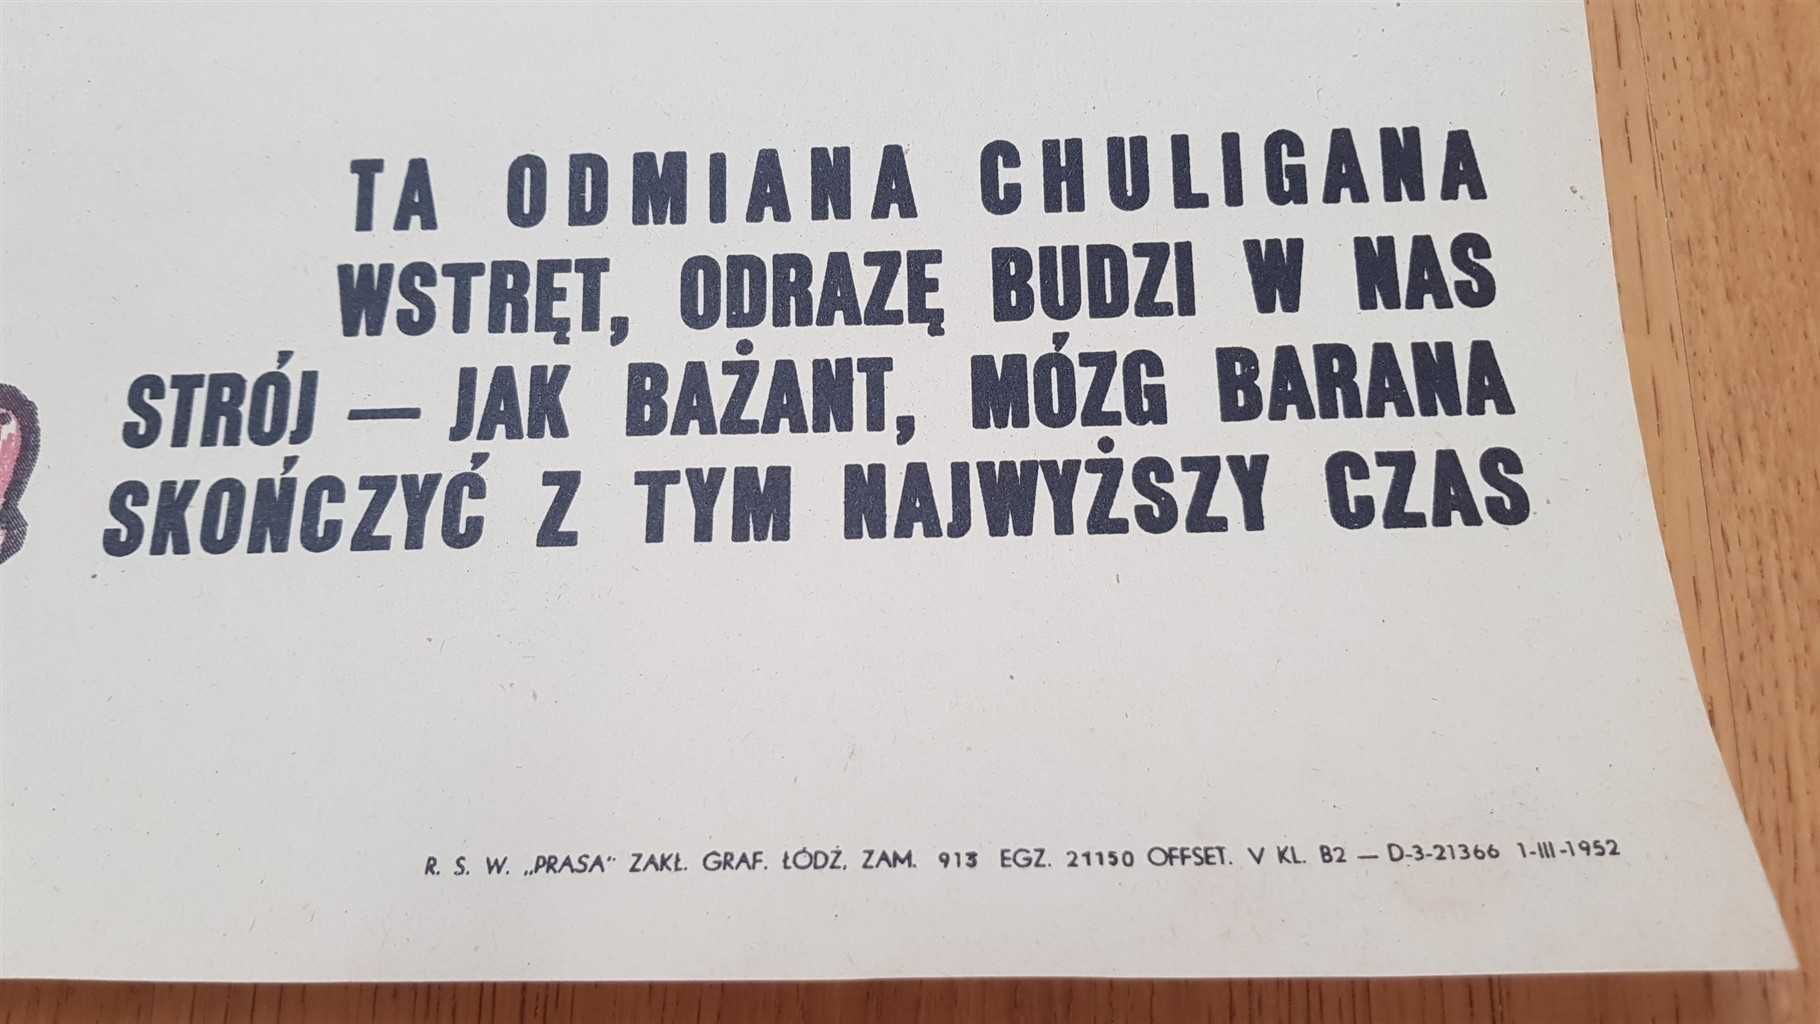 UNIKAT Chuligan bikiniarz plakat PRL 1952 RARE ORYGINAŁ propagandowy